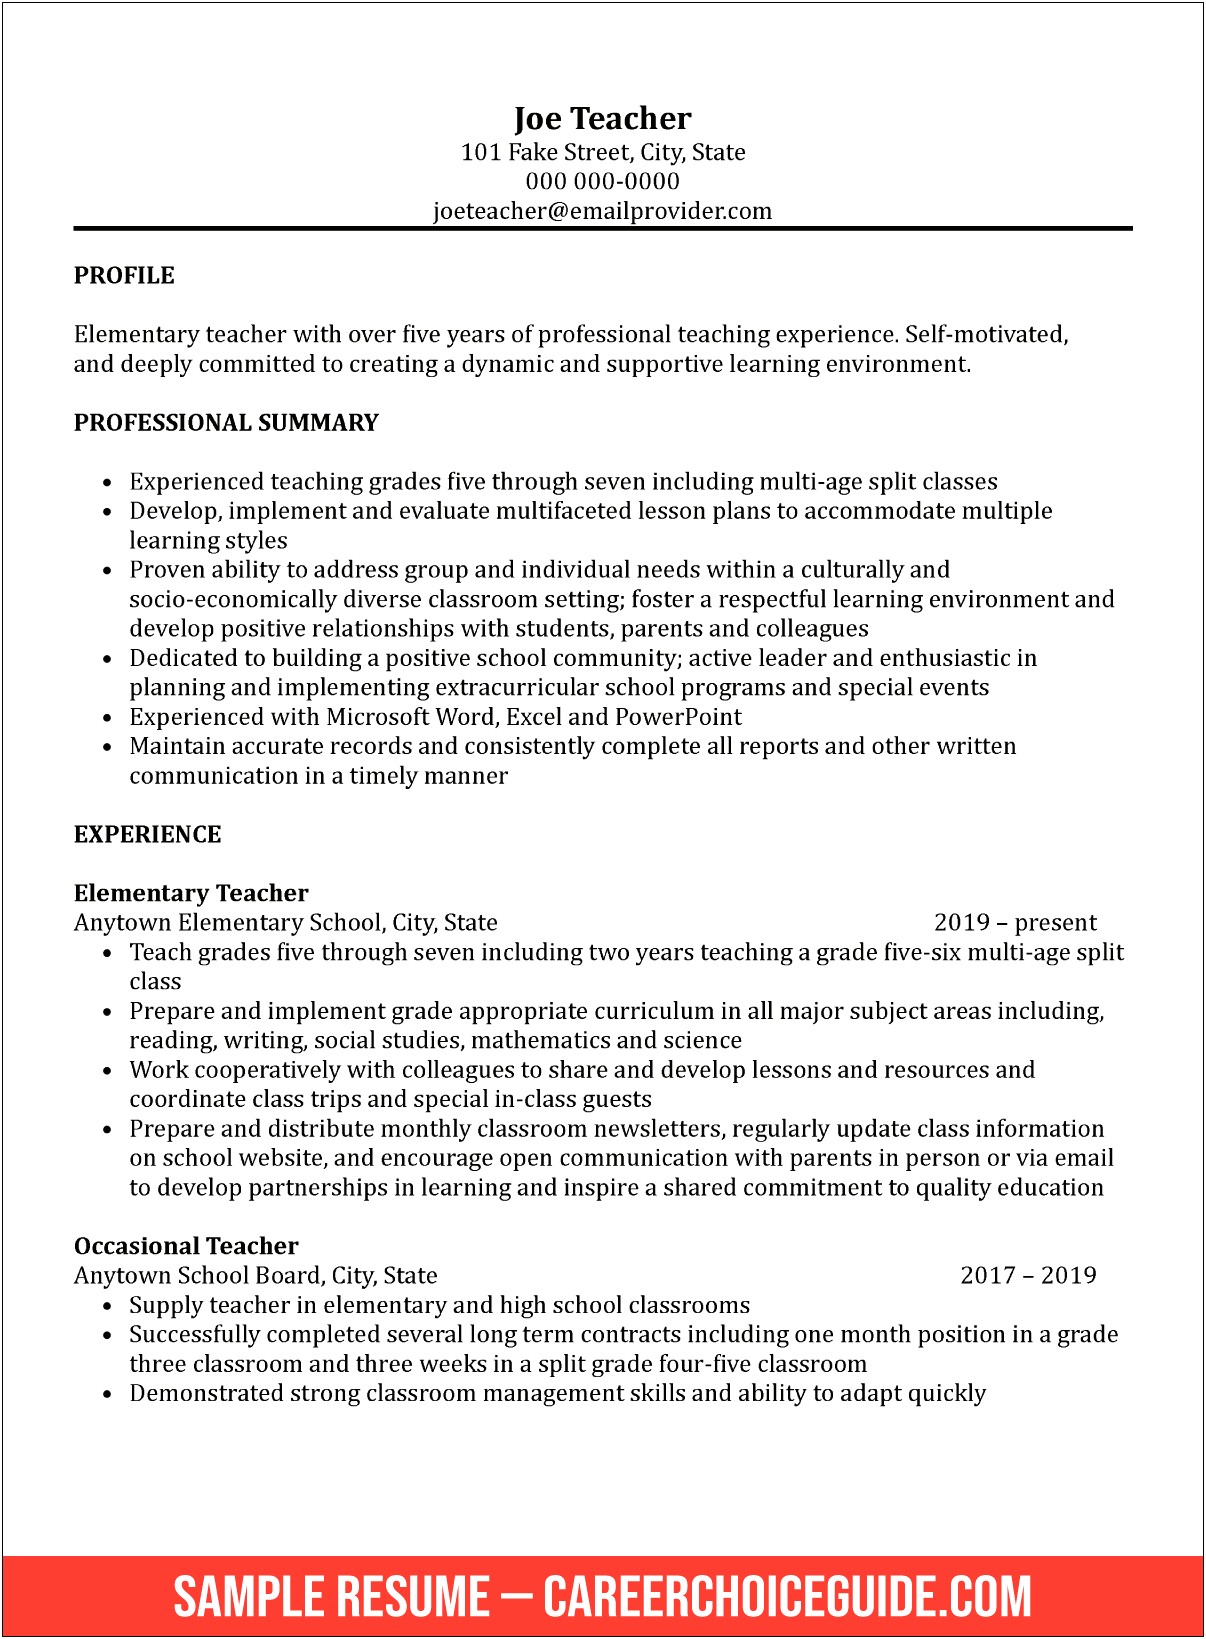 Resume Qualifications Of Elementary School Teachers